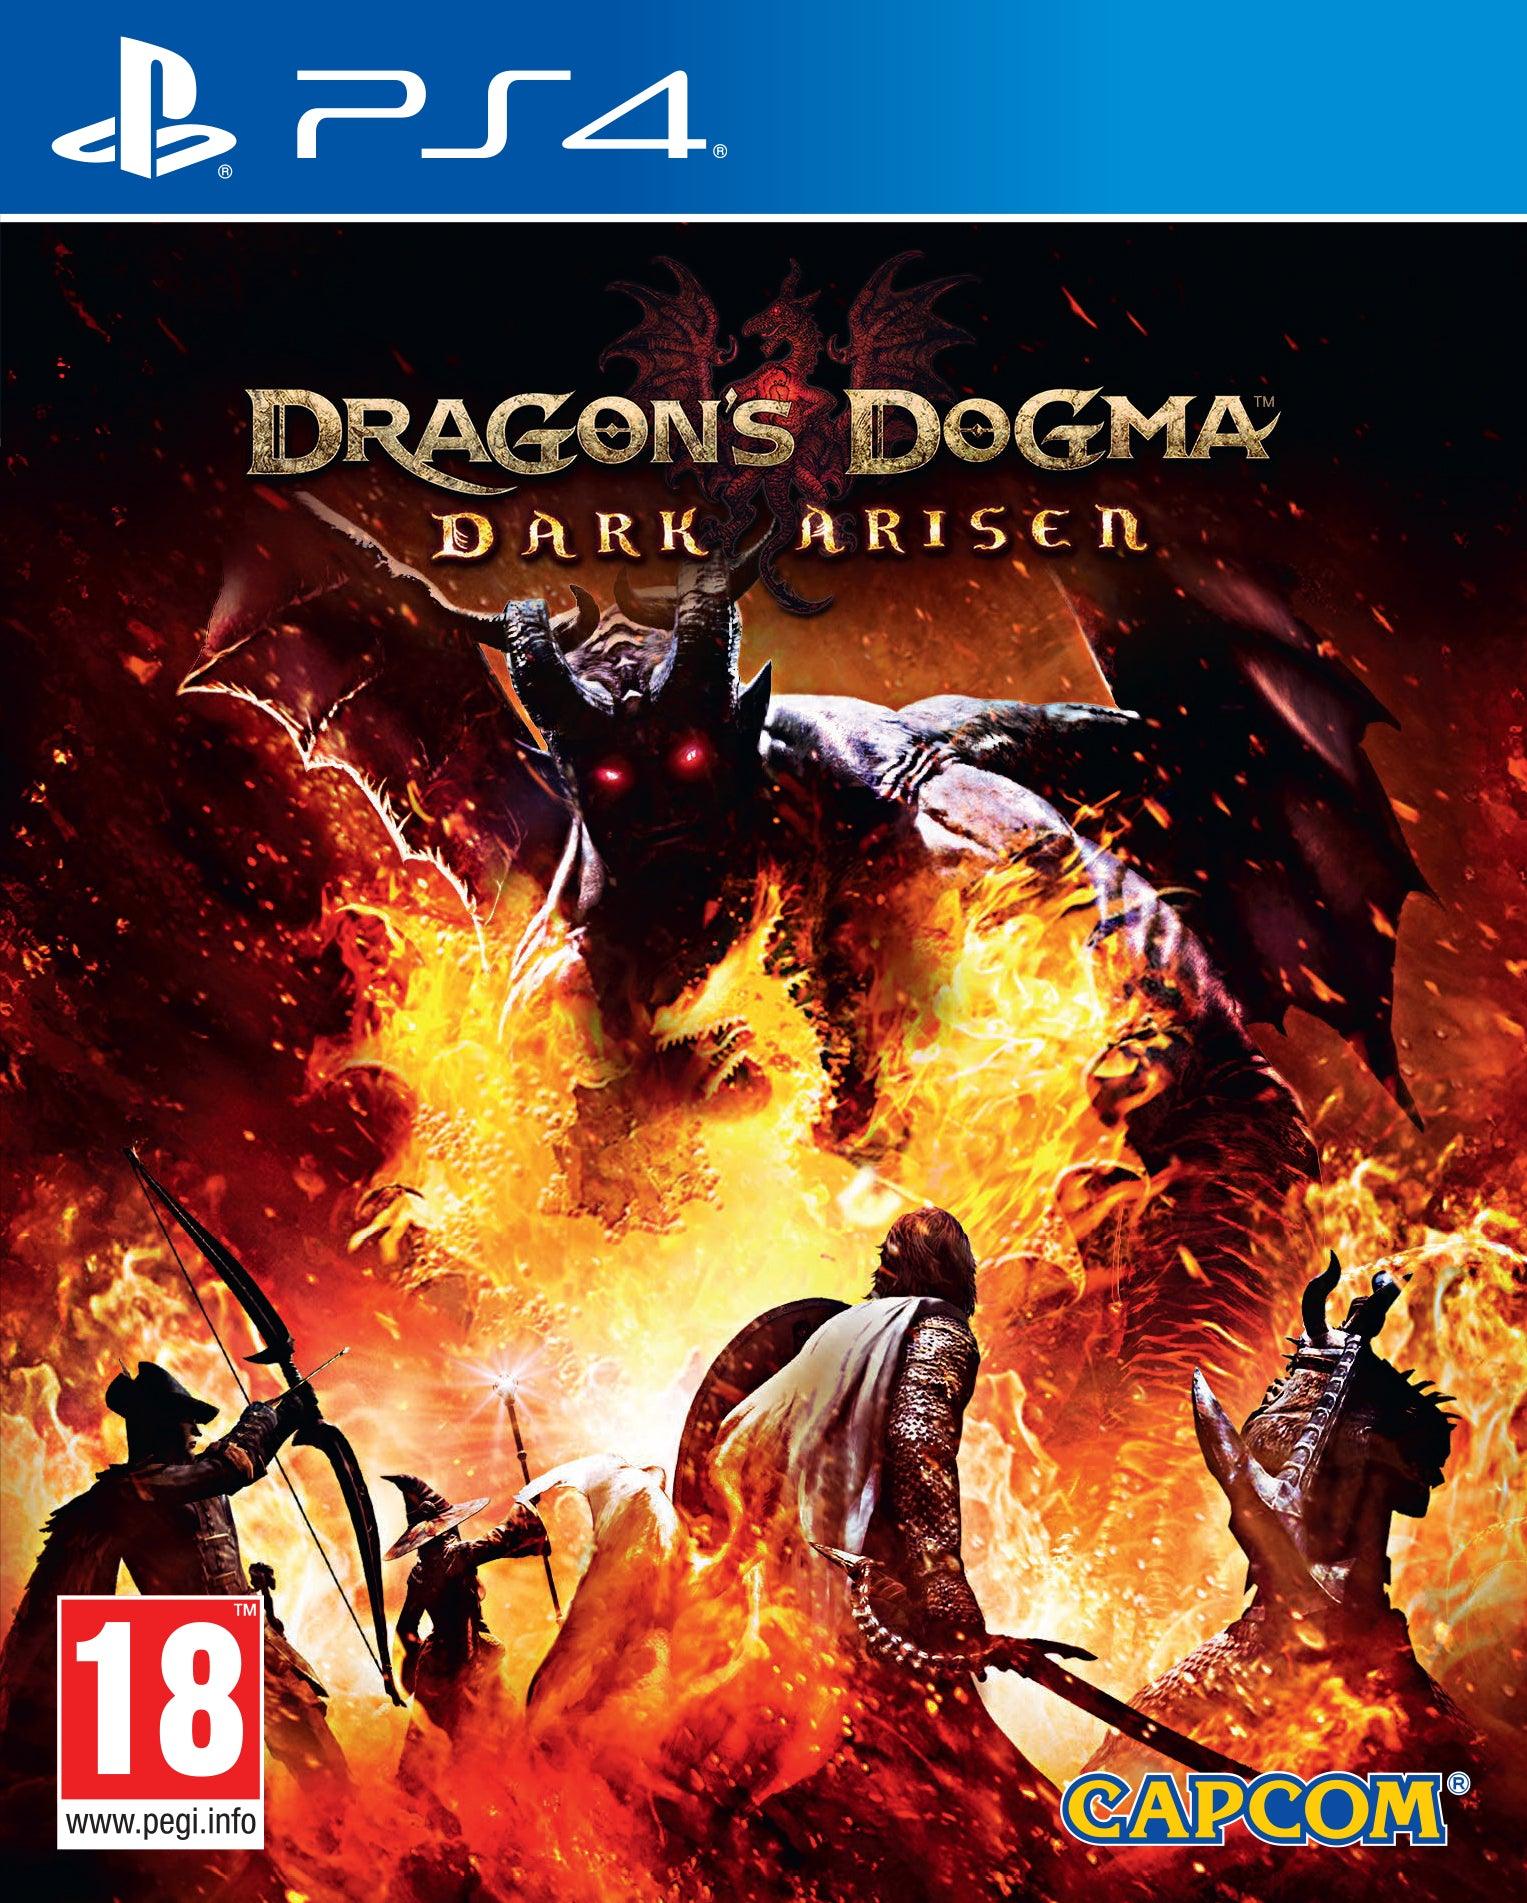 Dragons Dogma Dark Arisen - Want a New Gadget